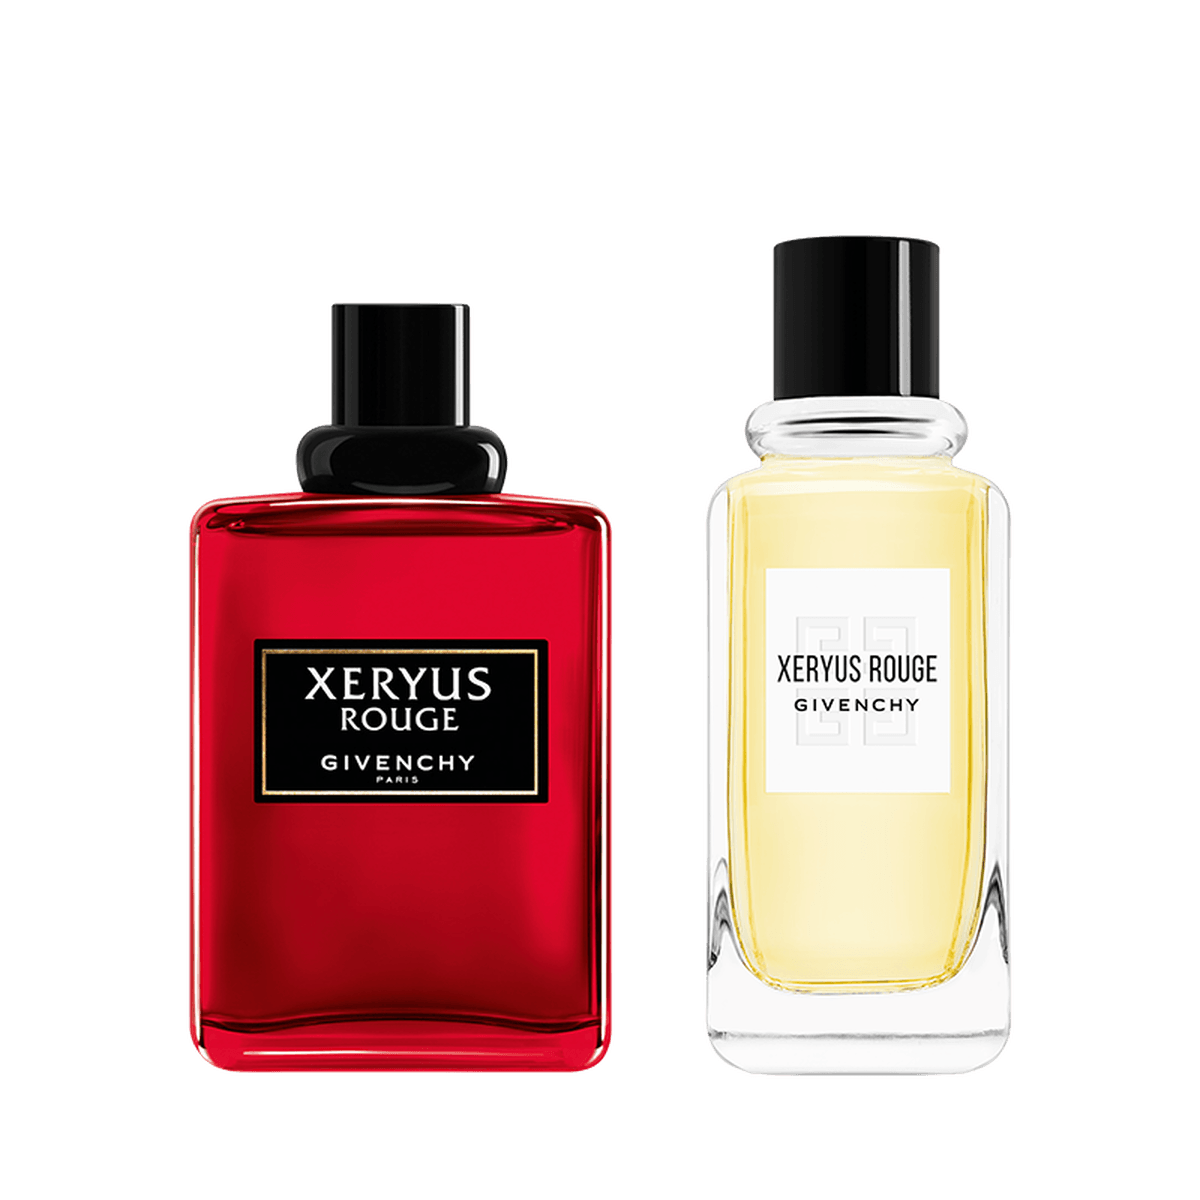 Givenchy Xeryus Rouge Eau de Toilette - Perfume Oasis